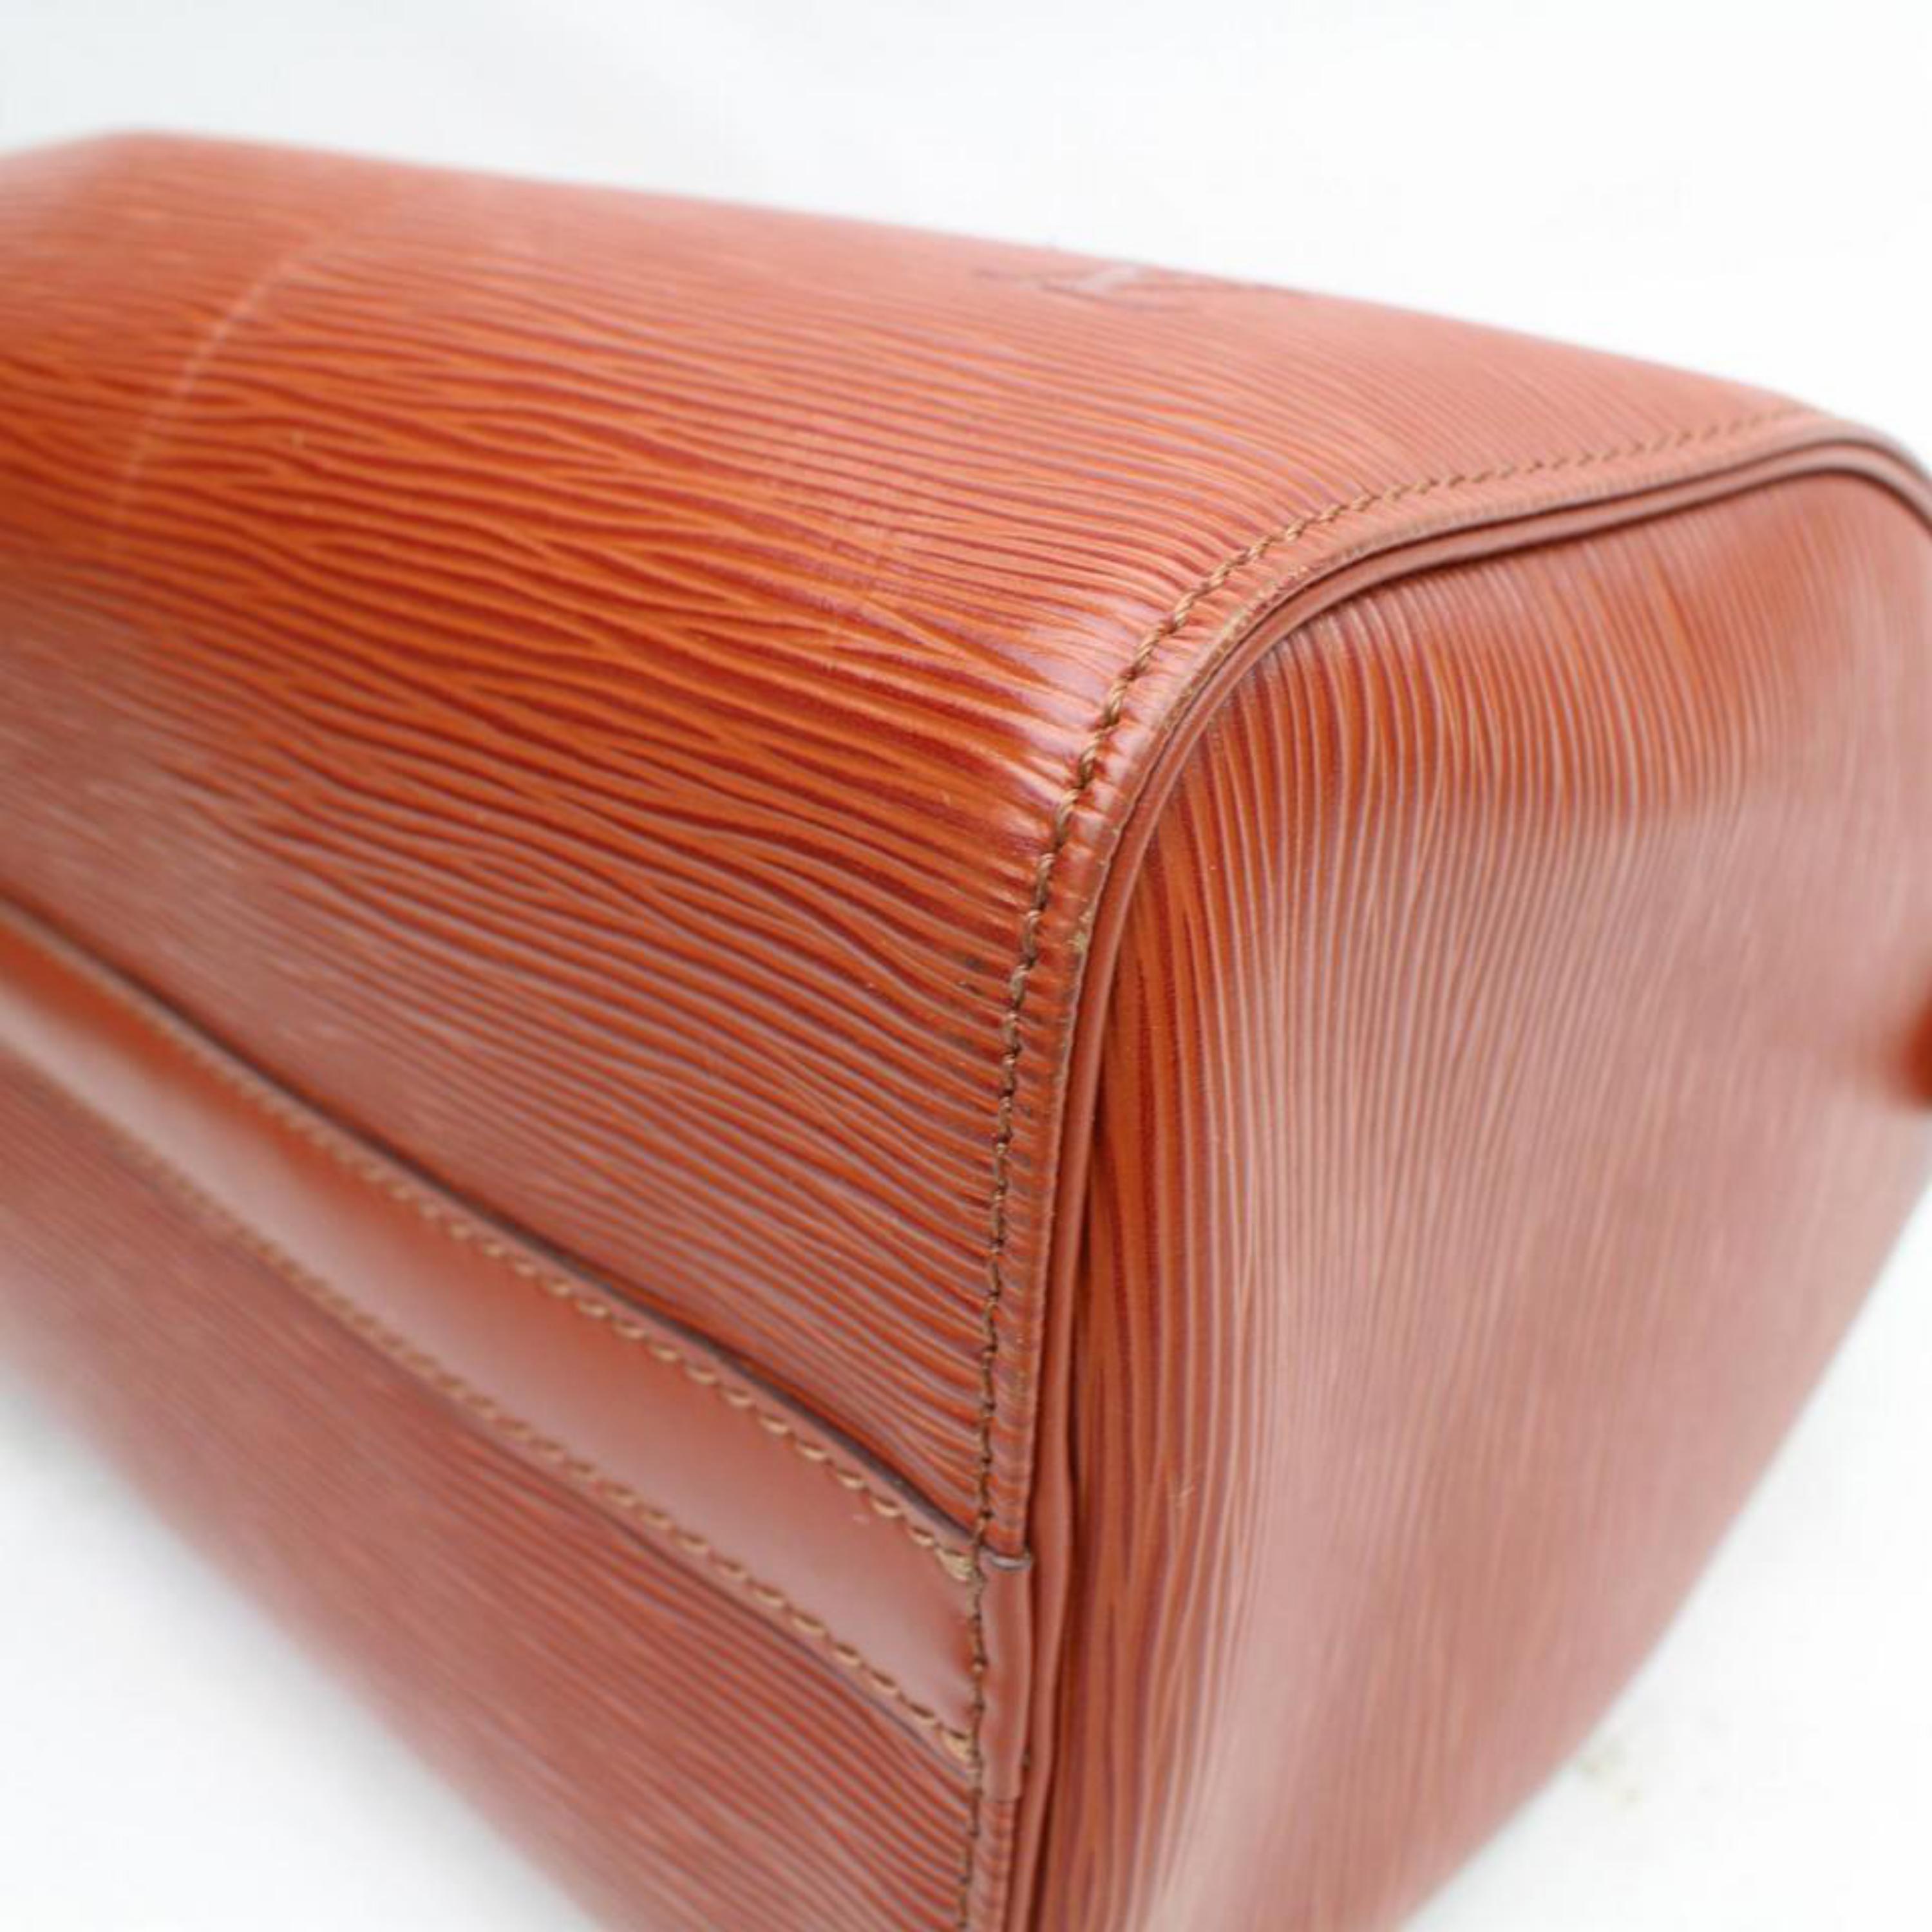 Louis Vuitton Speedy 25 869648 Brown Leather Satchel For Sale 4